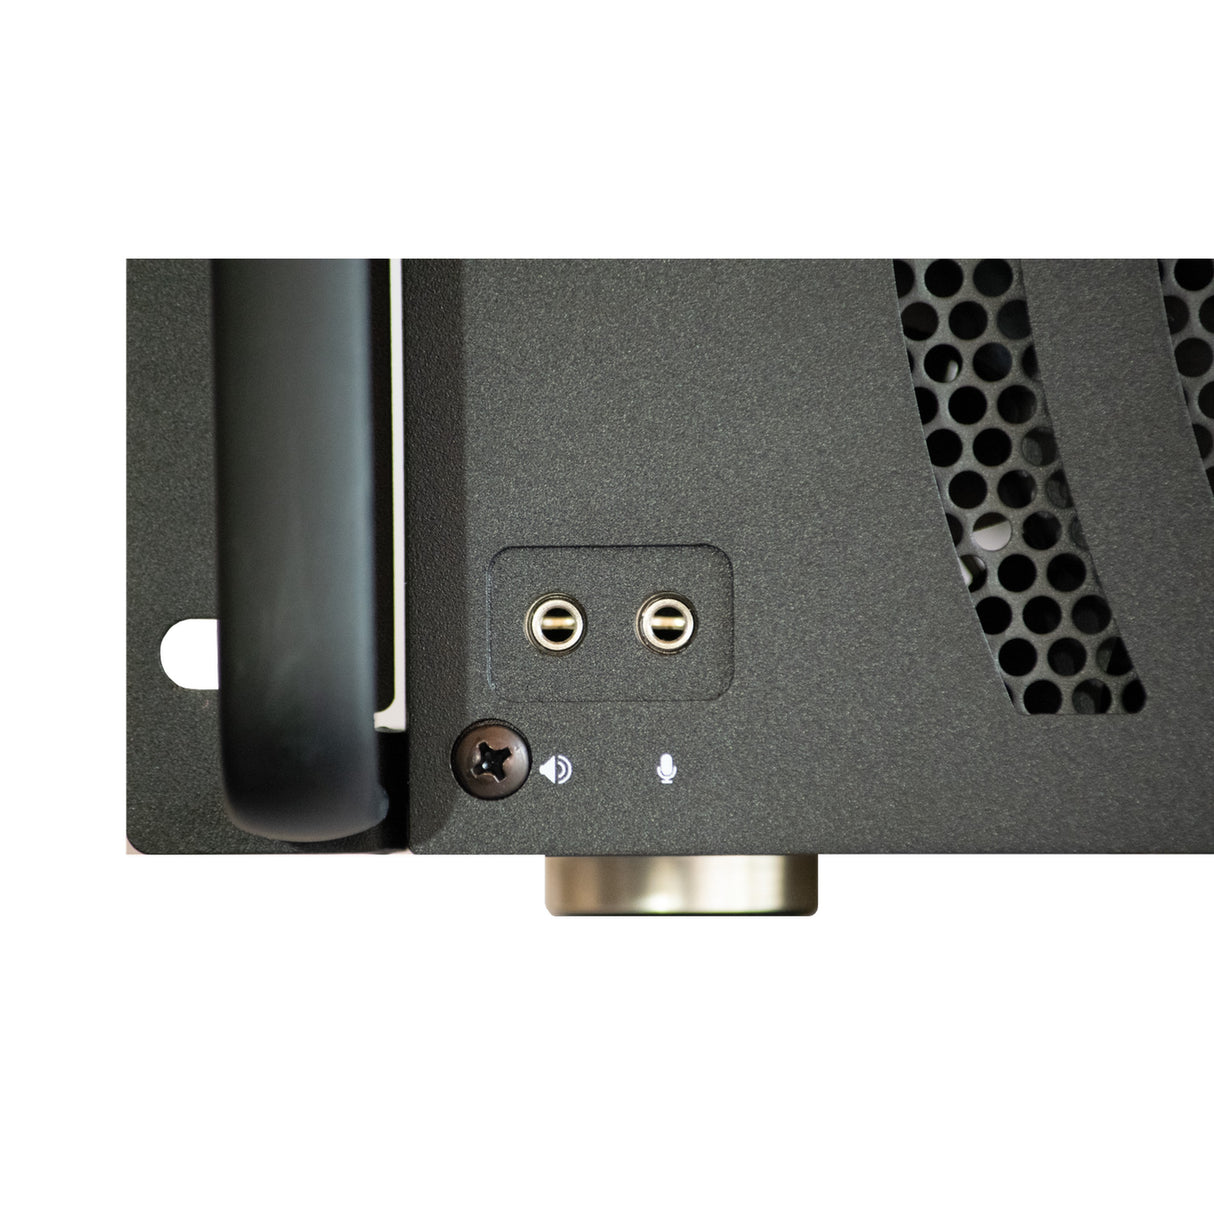 Telestream Wirecast Gear 3 HD HDMI Streaming Switcher